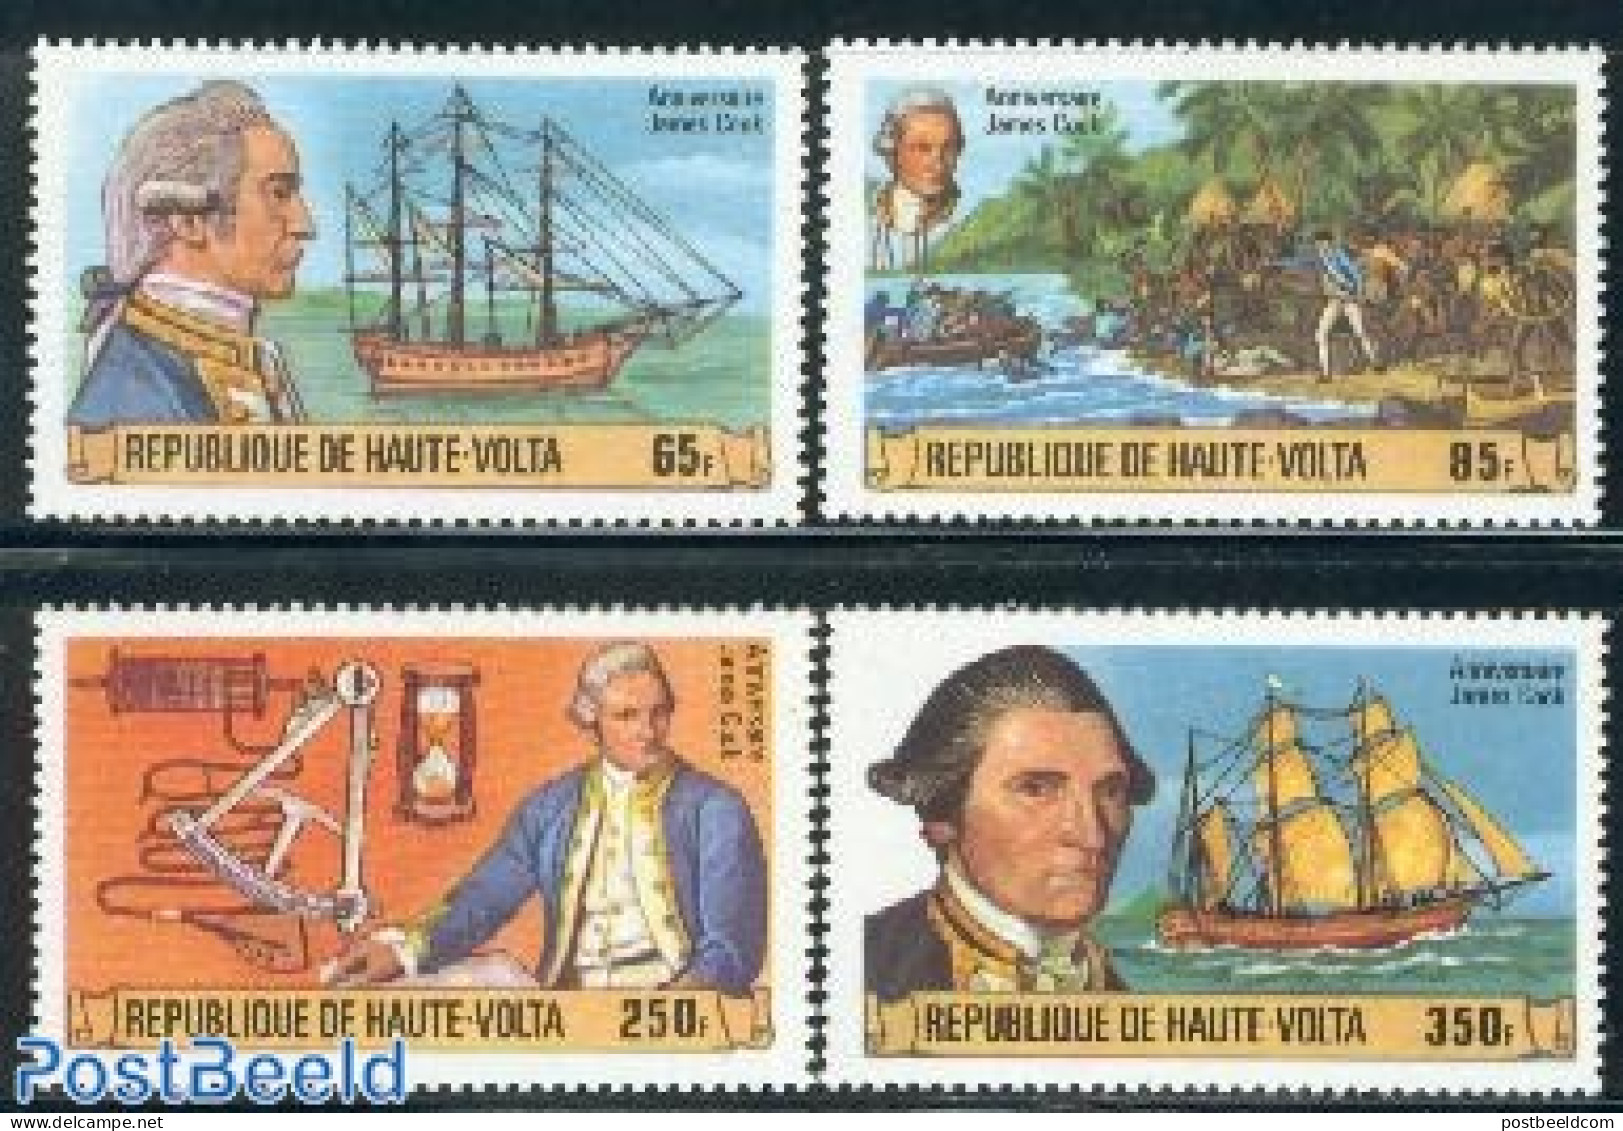 Upper Volta 1978 James Cook 4v, Mint NH, History - Transport - Explorers - Ships And Boats - Onderzoekers